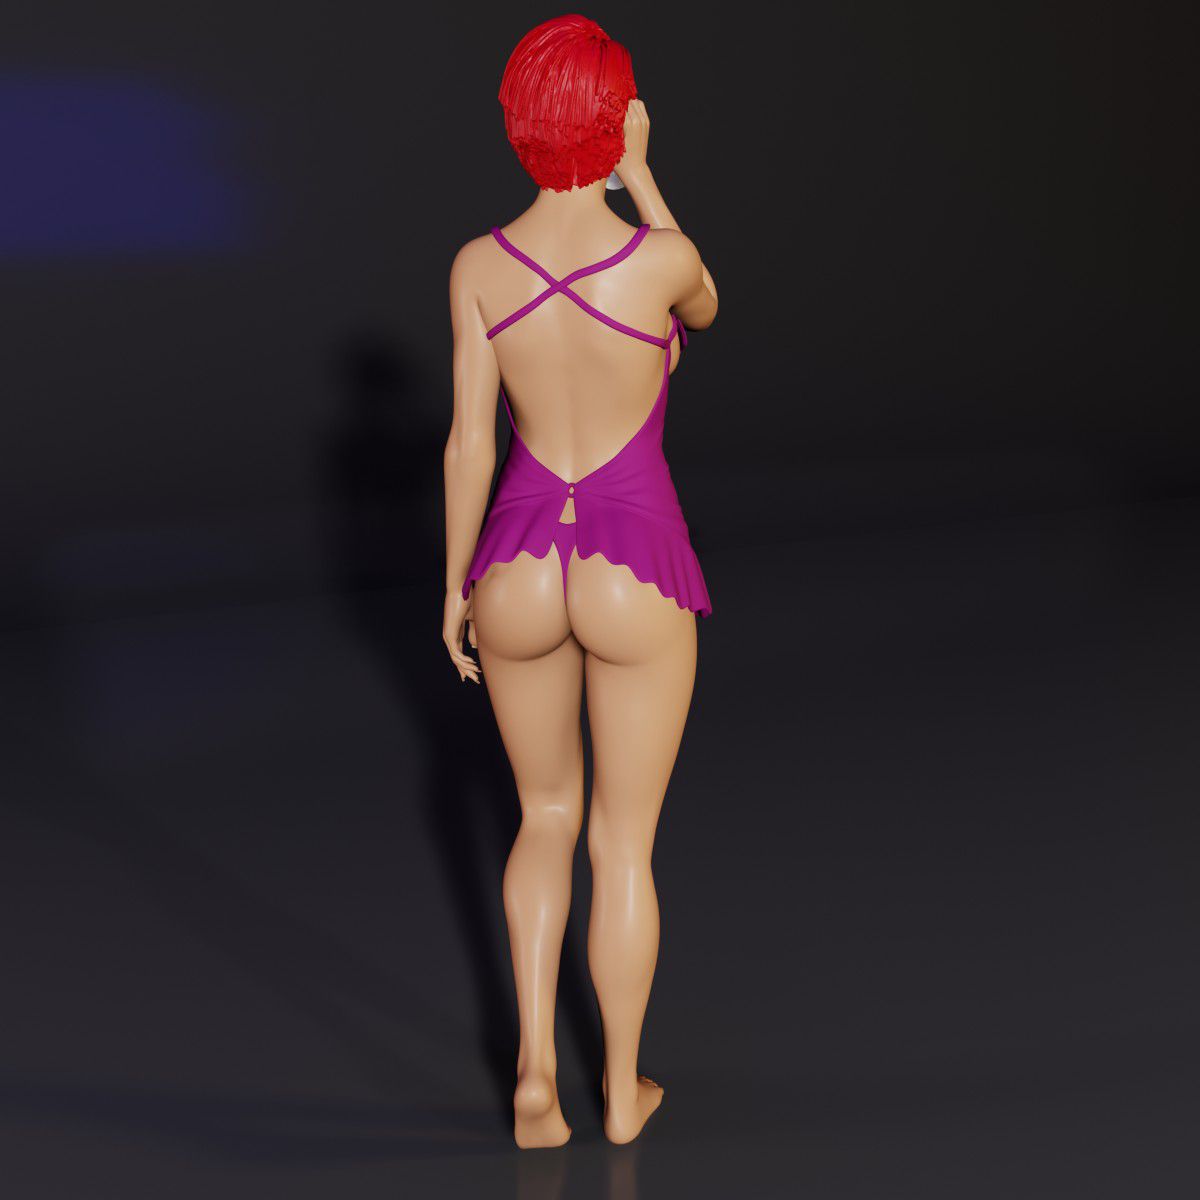 Ellie - Spectator Series | 3D Printed | Fanart | Unpainted | NSFW Version | Figurine | Figure | Miniature | Sexy |